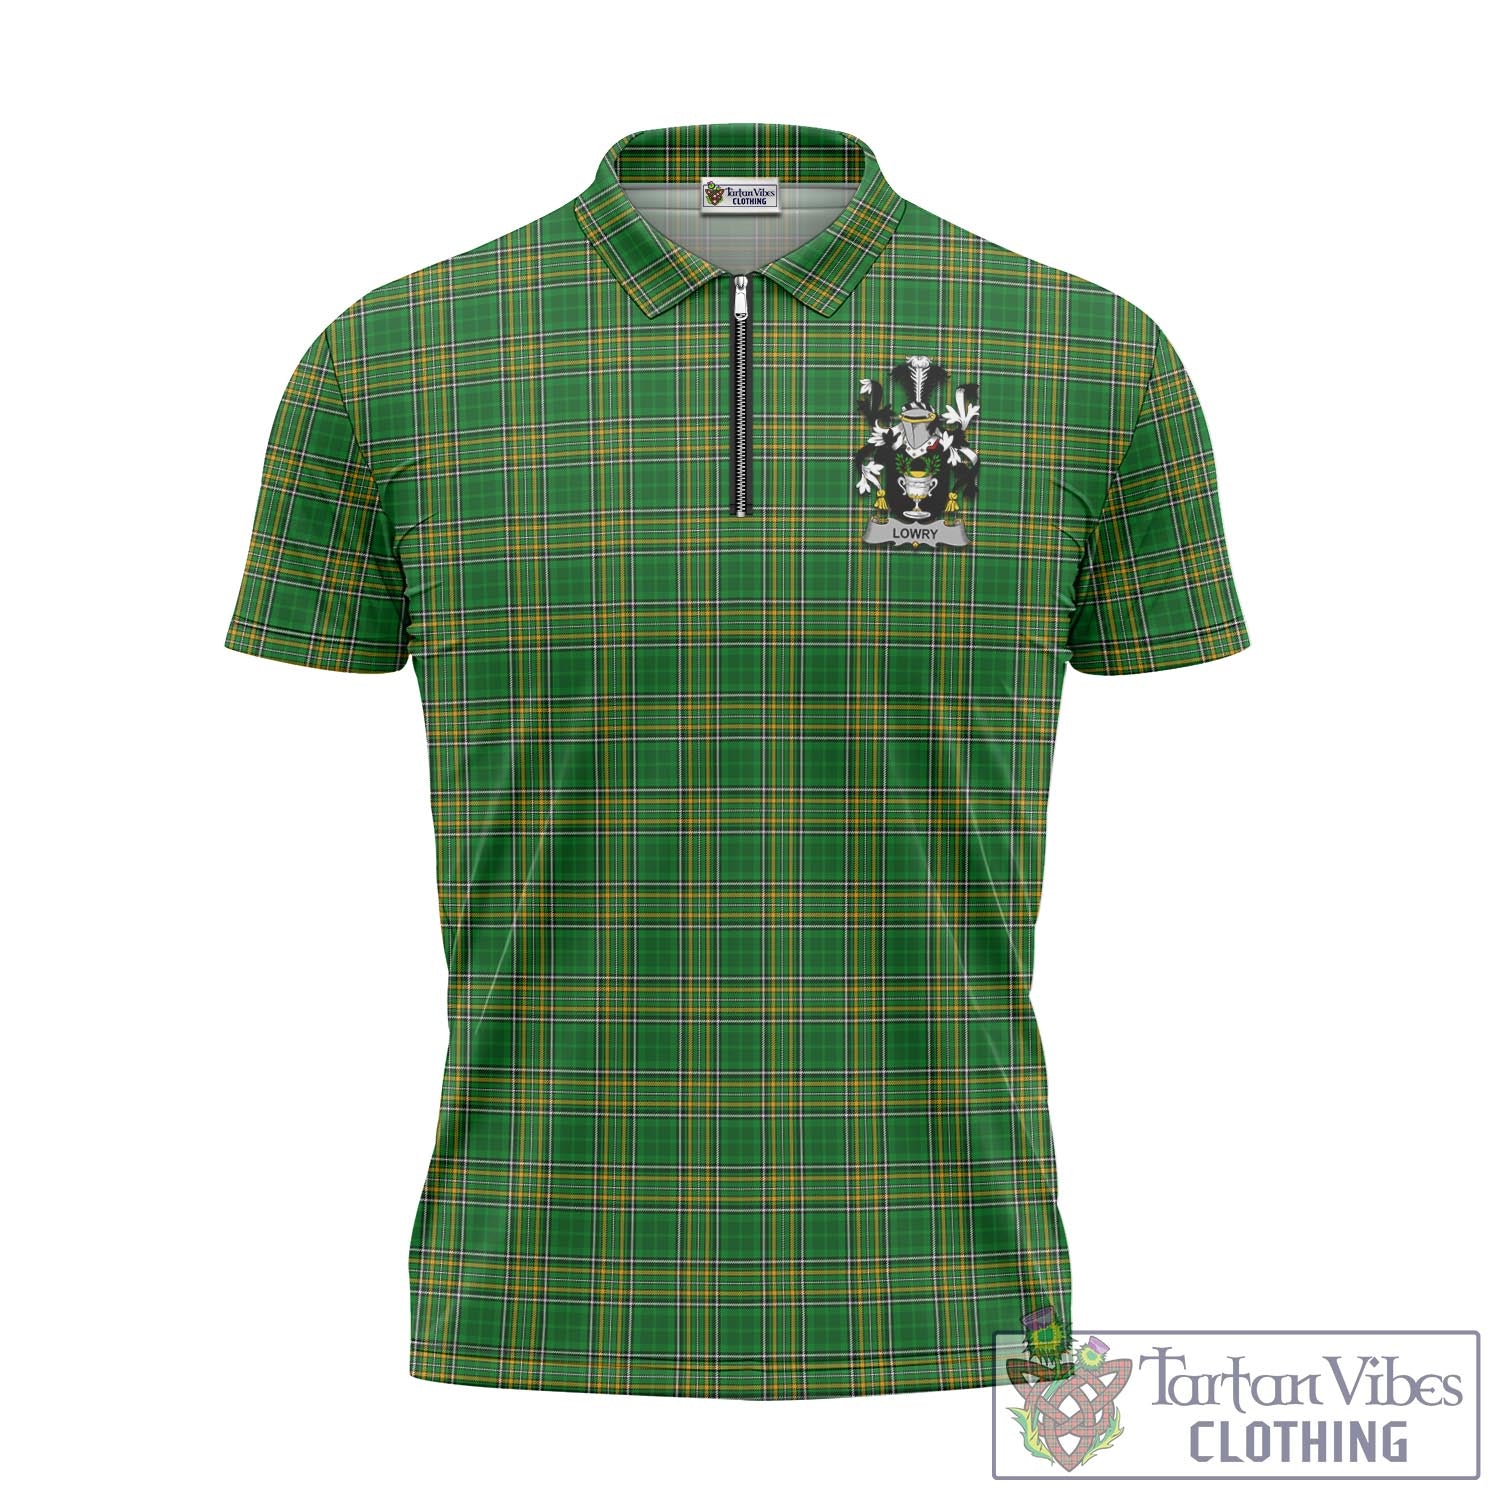 Tartan Vibes Clothing Lowry Ireland Clan Tartan Zipper Polo Shirt with Coat of Arms